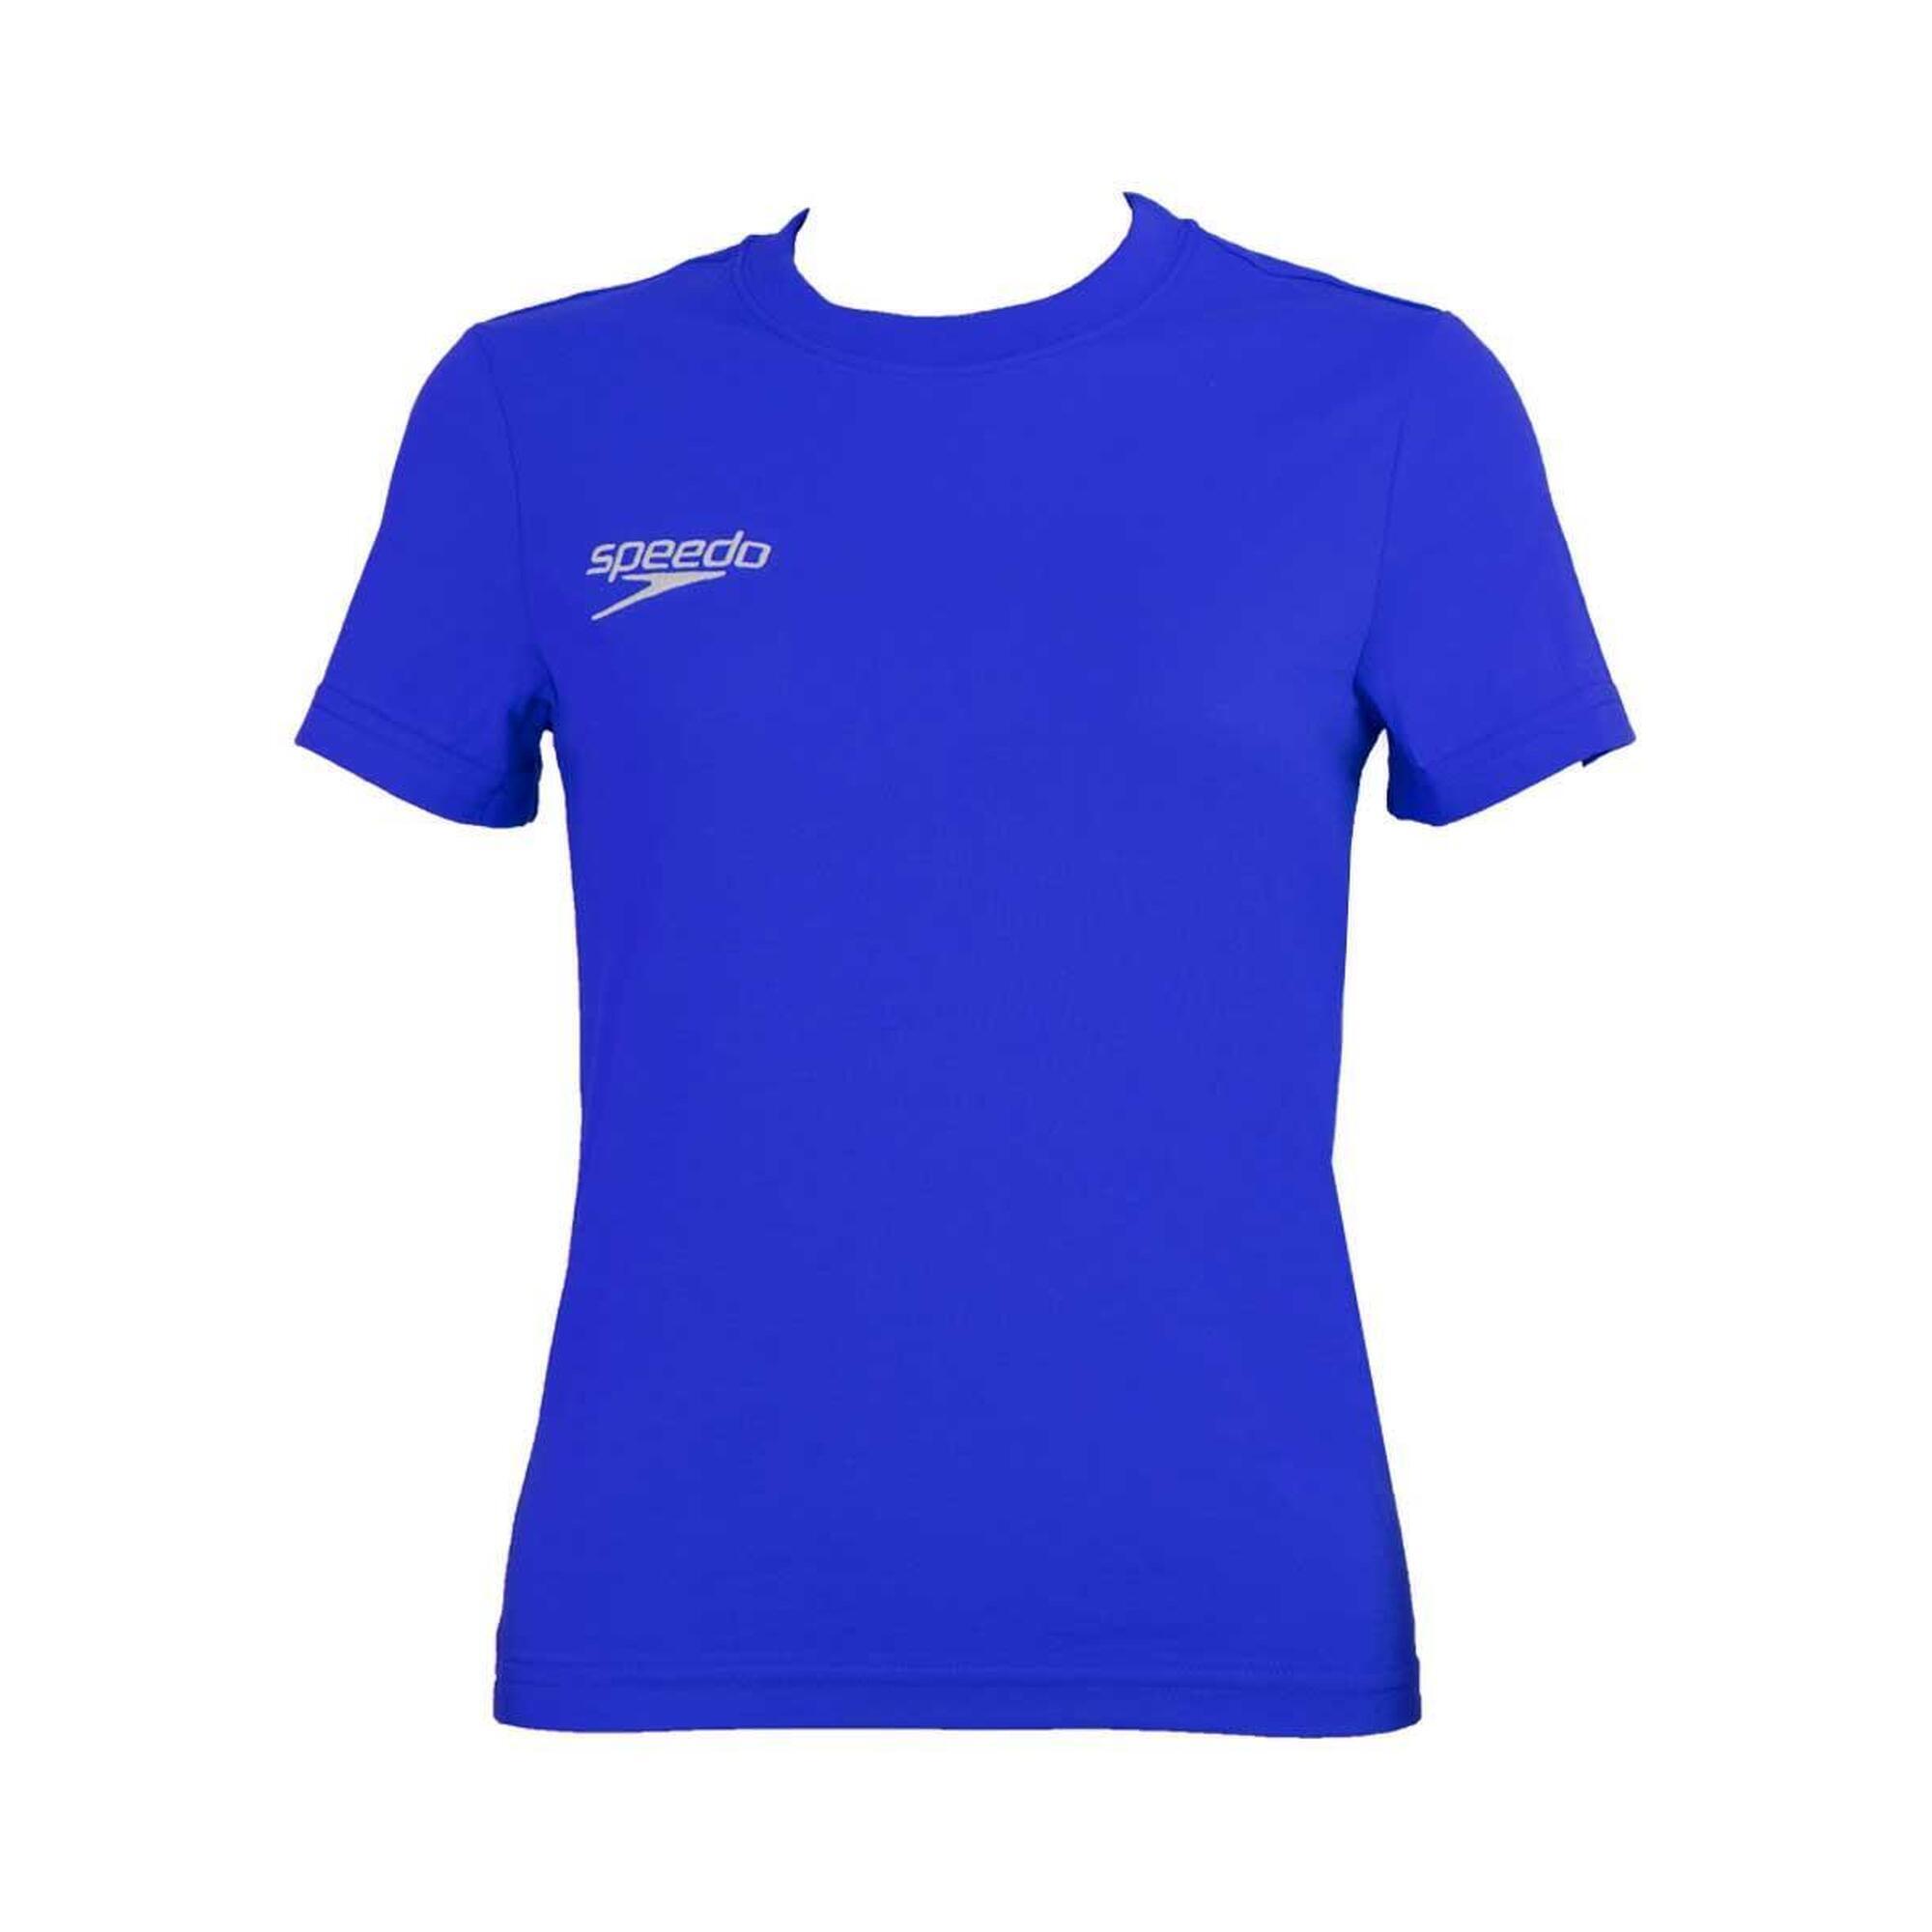 Speedo Team Kit Junior Small Logo T-Shirt - Blue - Blue 1/1